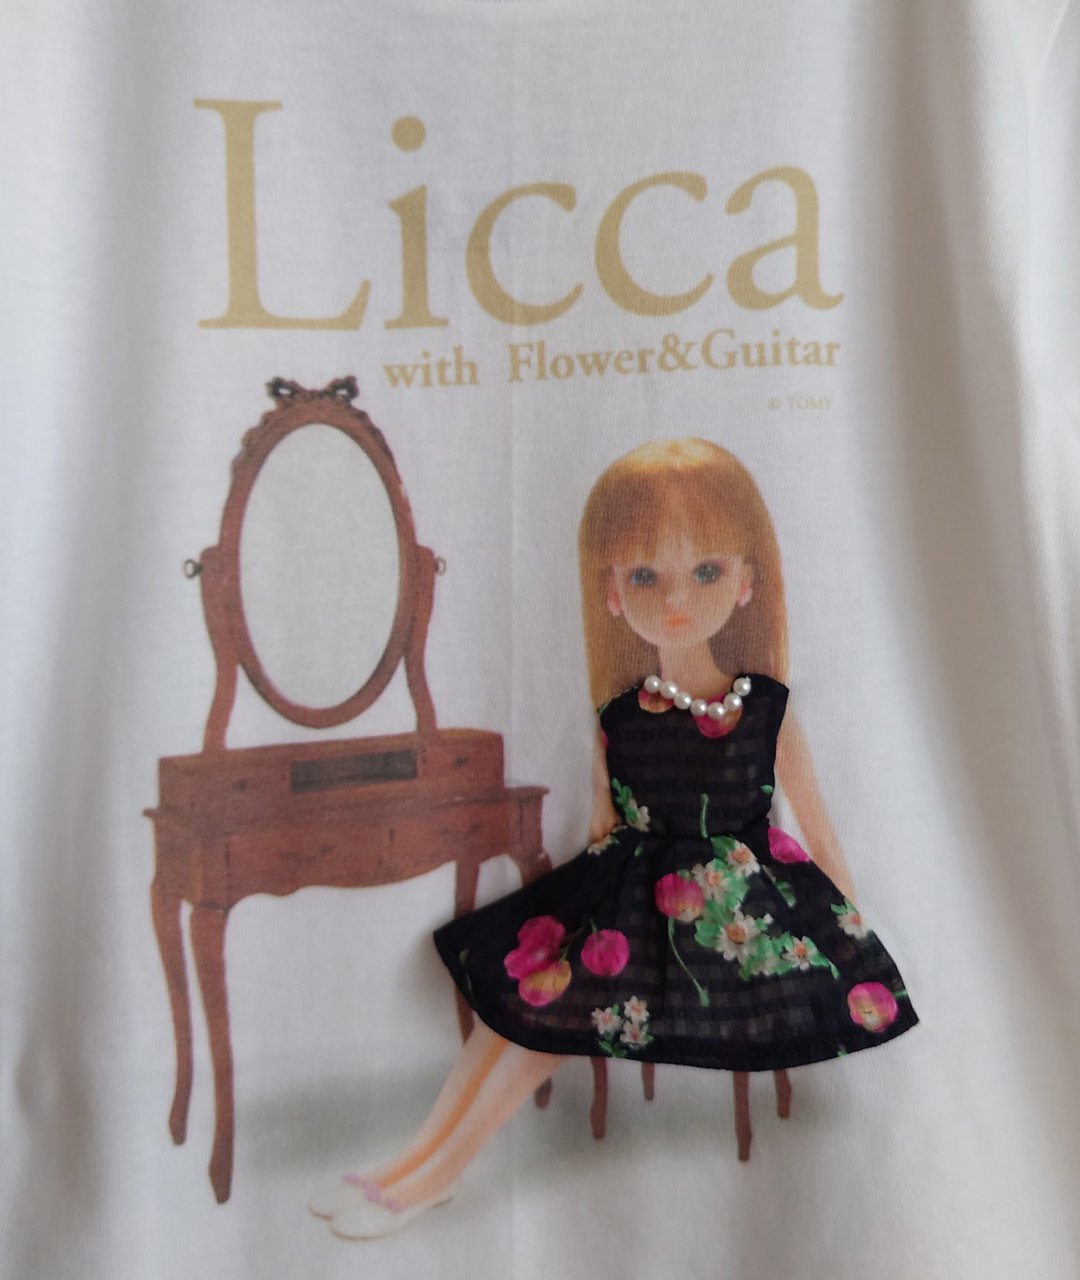 KIDS Licca 3D T-sh 3rd (三代目リカちゃん)子供用 - flower&guitar